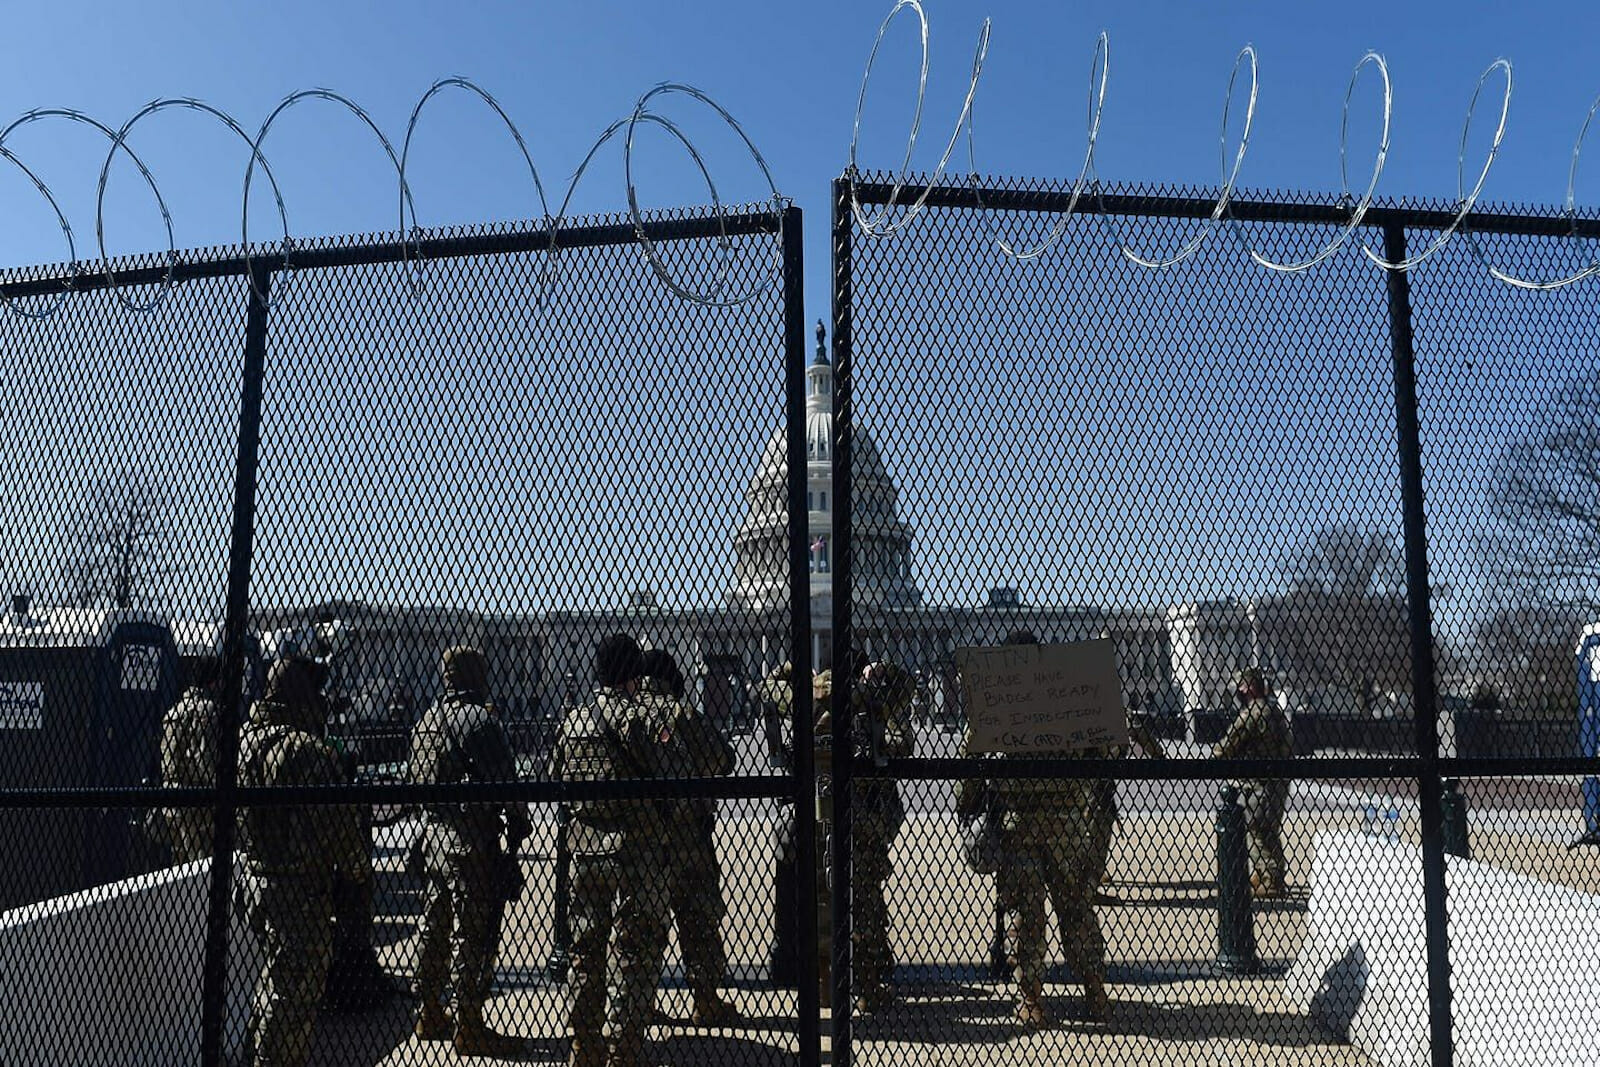 Security fence around U.S. Capitol